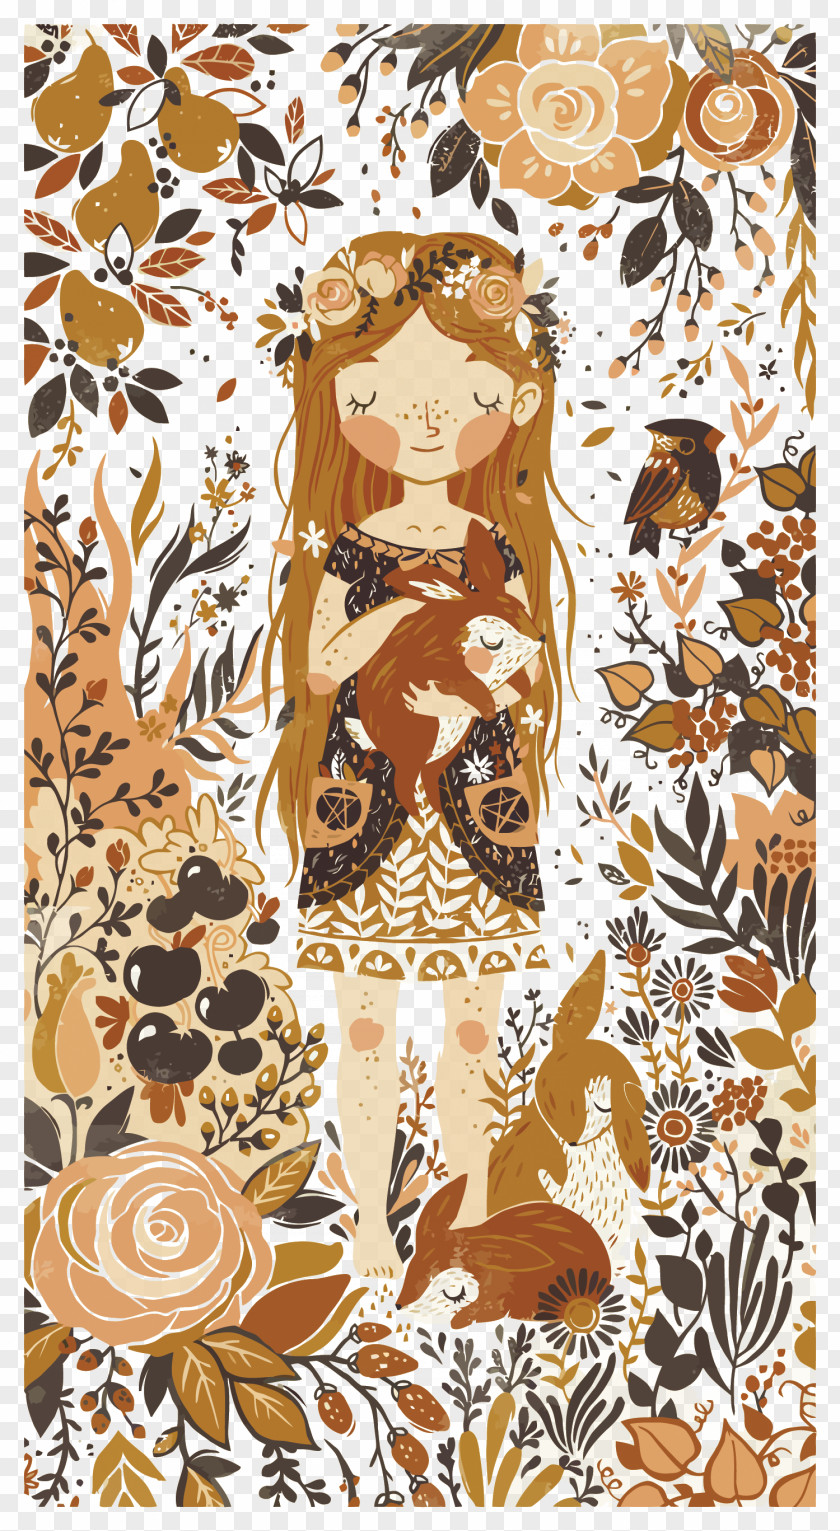 Pentacle Art Illustrator Tarot Illustration PNG Illustration, forest girl, woman illustration clipart PNG